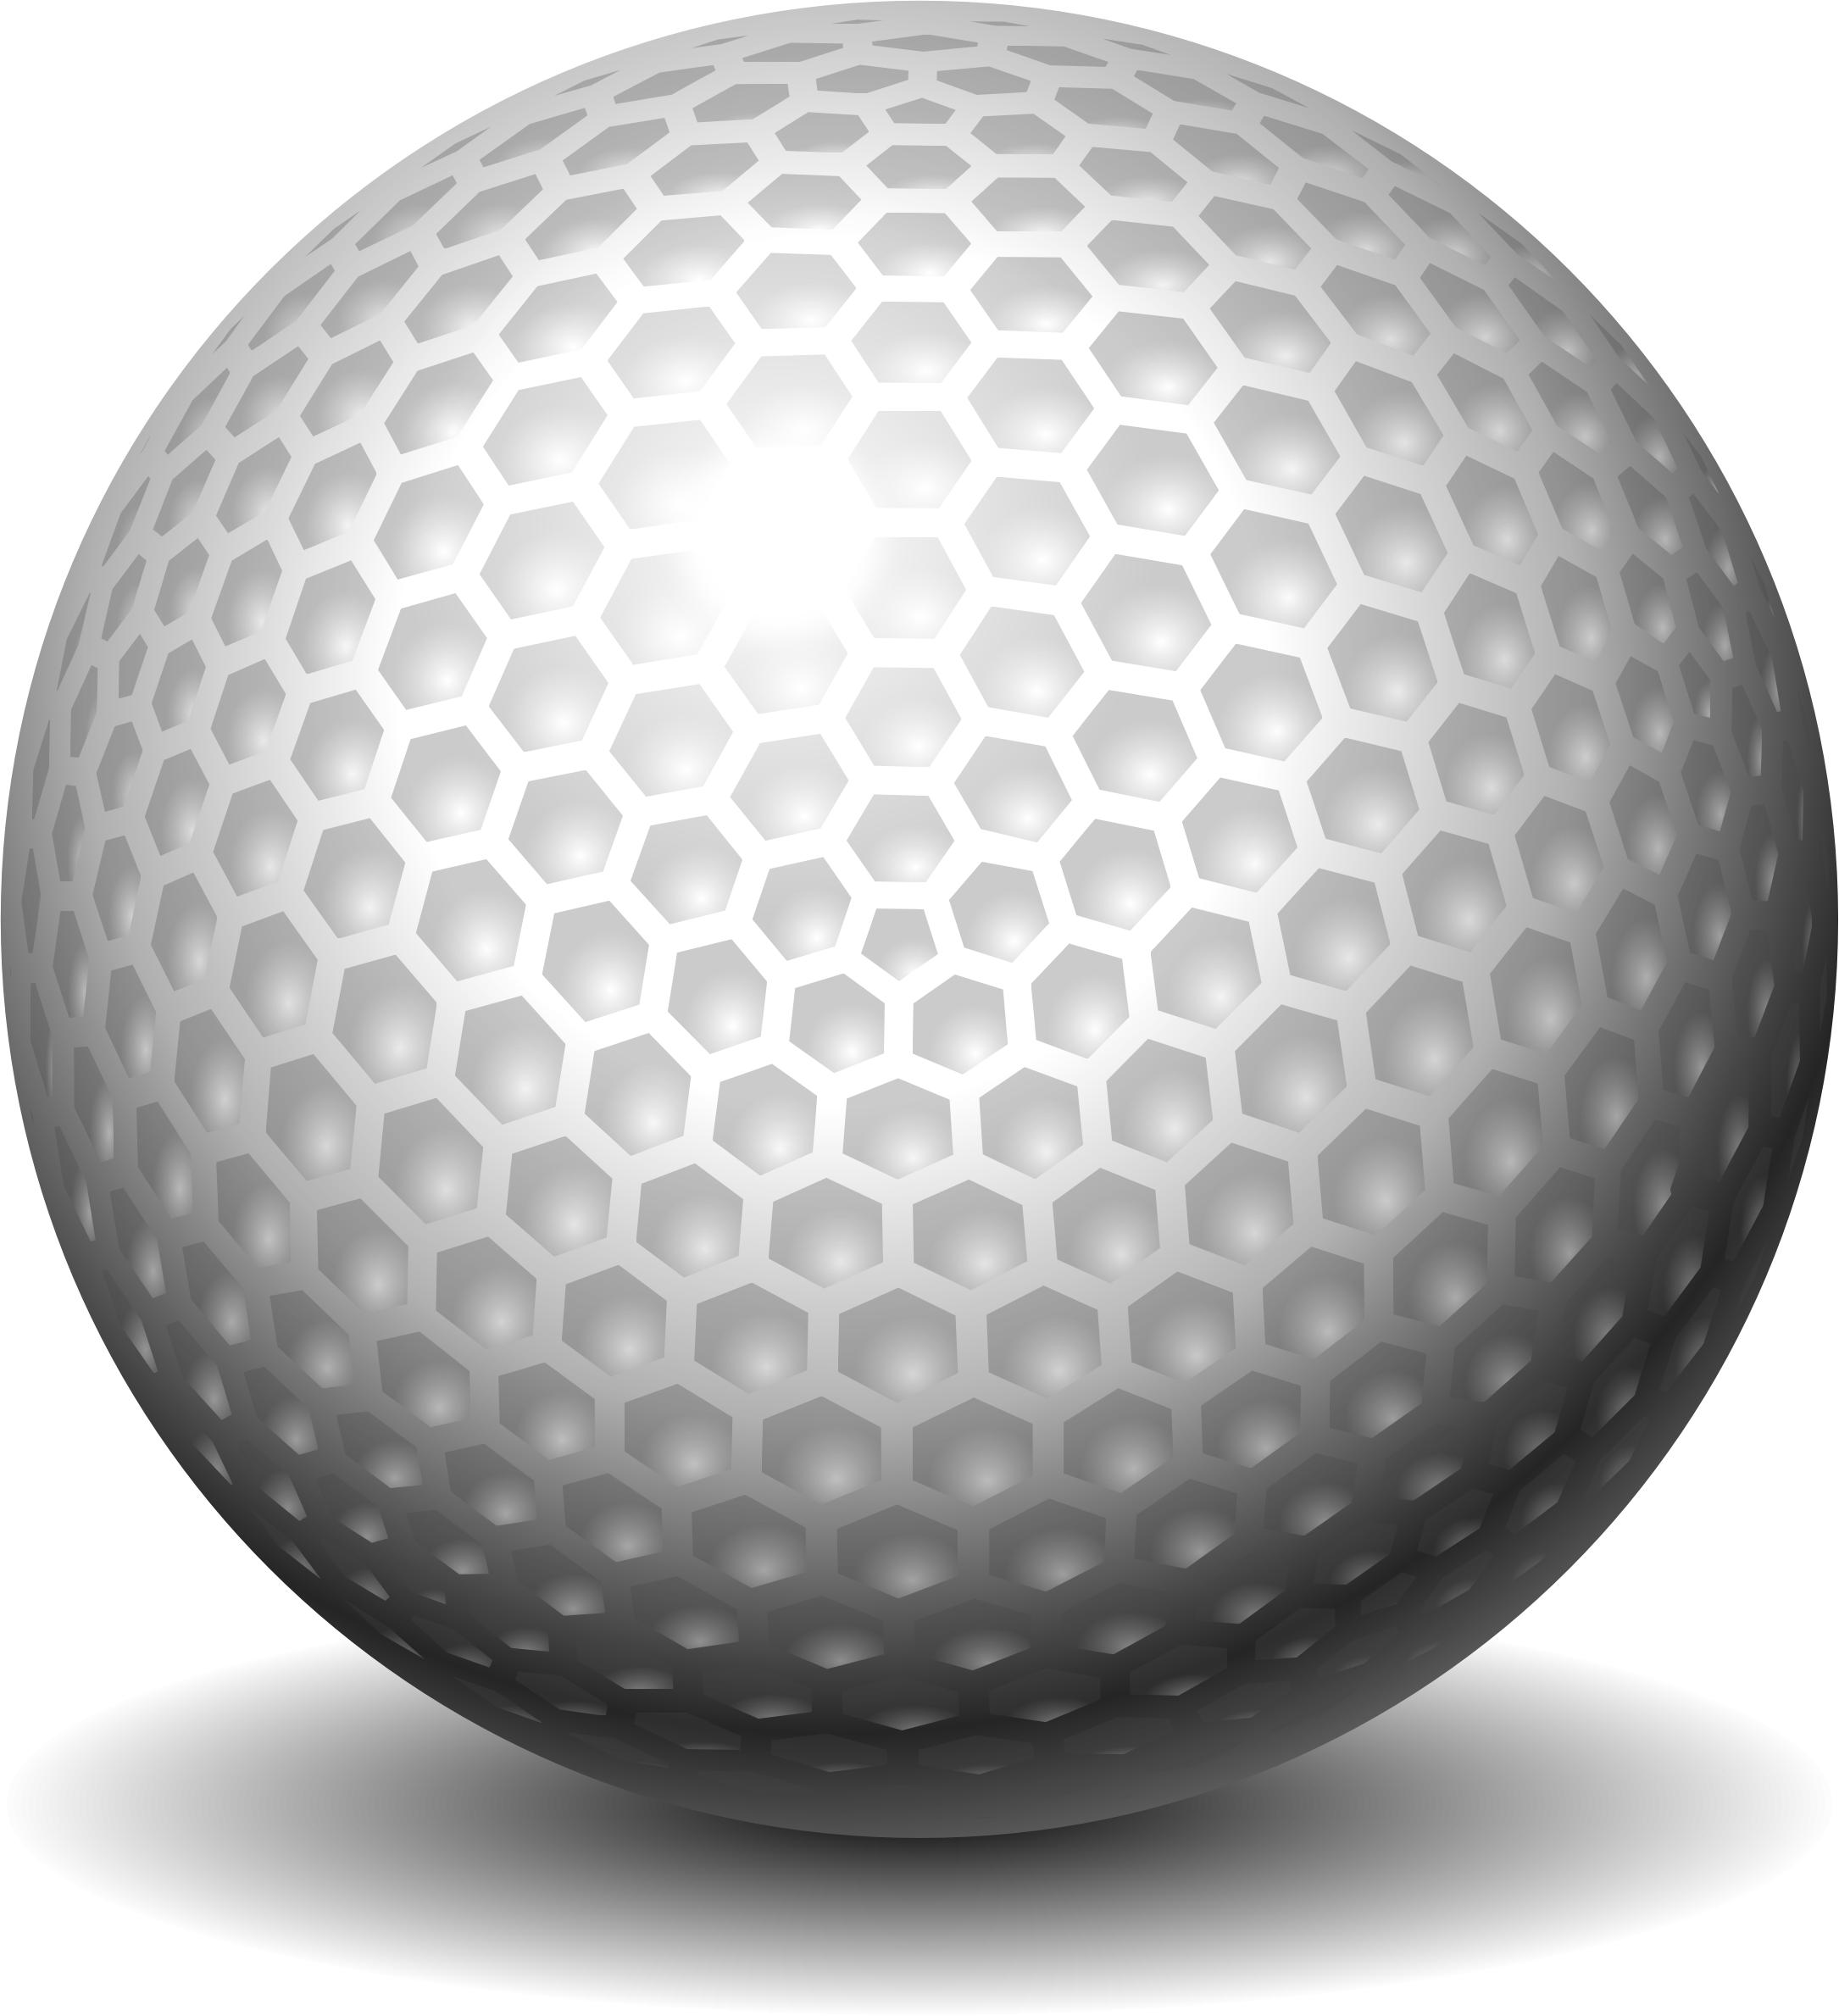 golf-ball, golfo kamuoliukas PNG icons